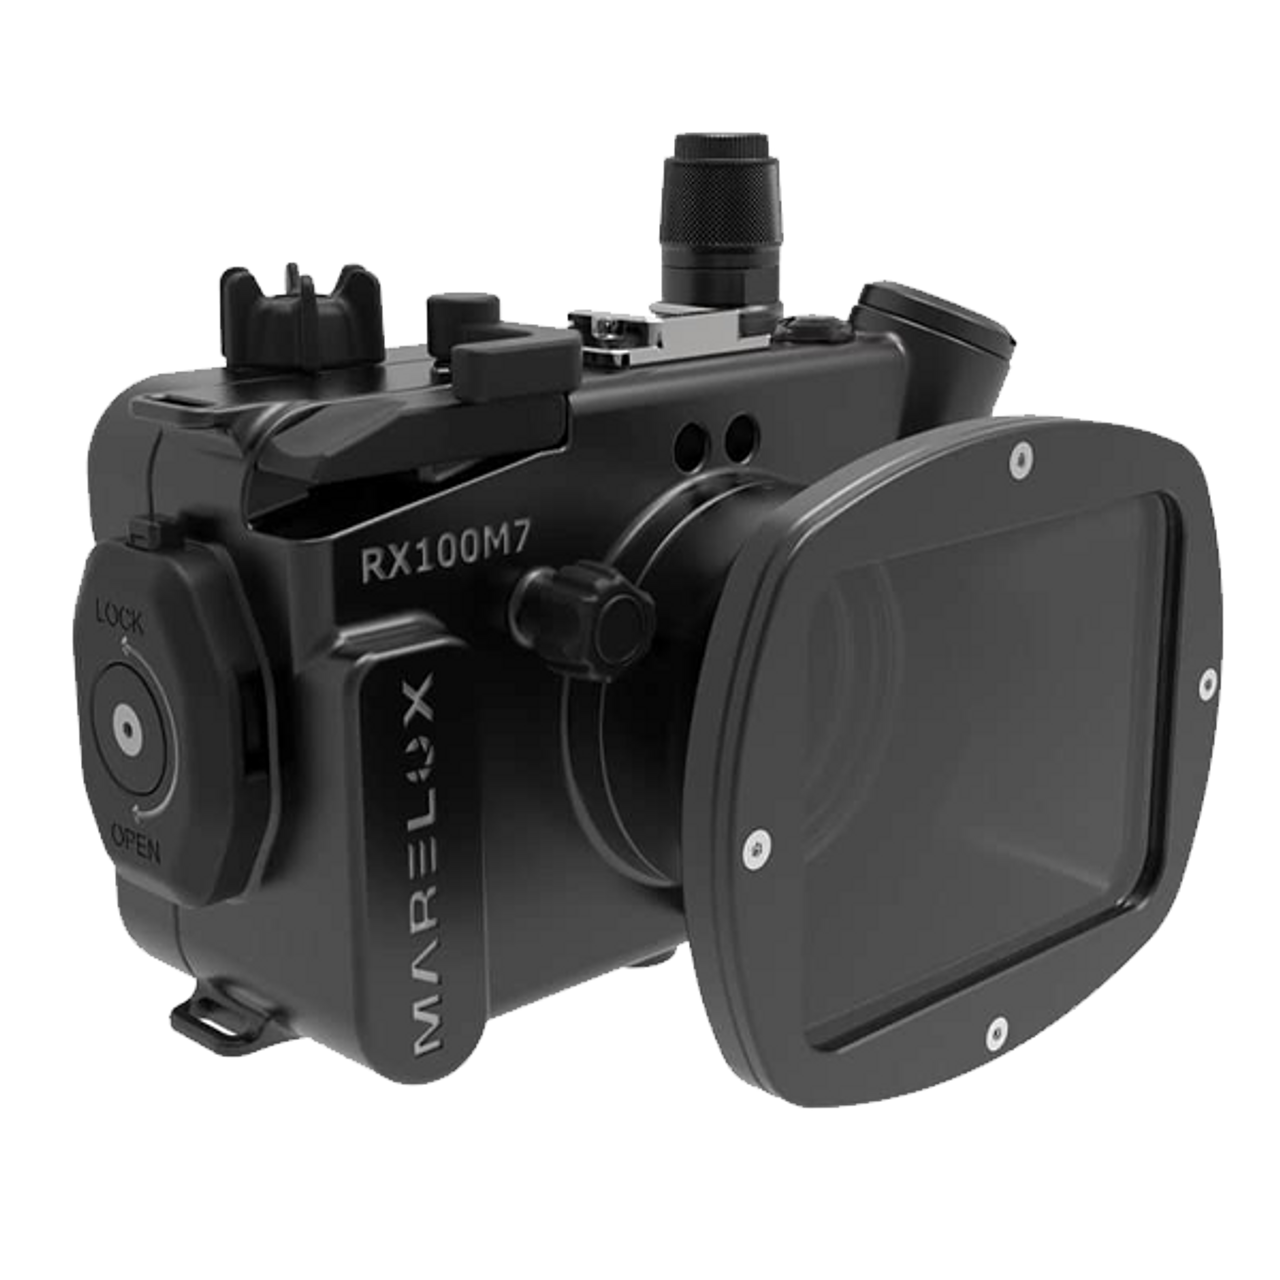 Sony RX100 VII 20.1 Megapixel Compact Camera, Black